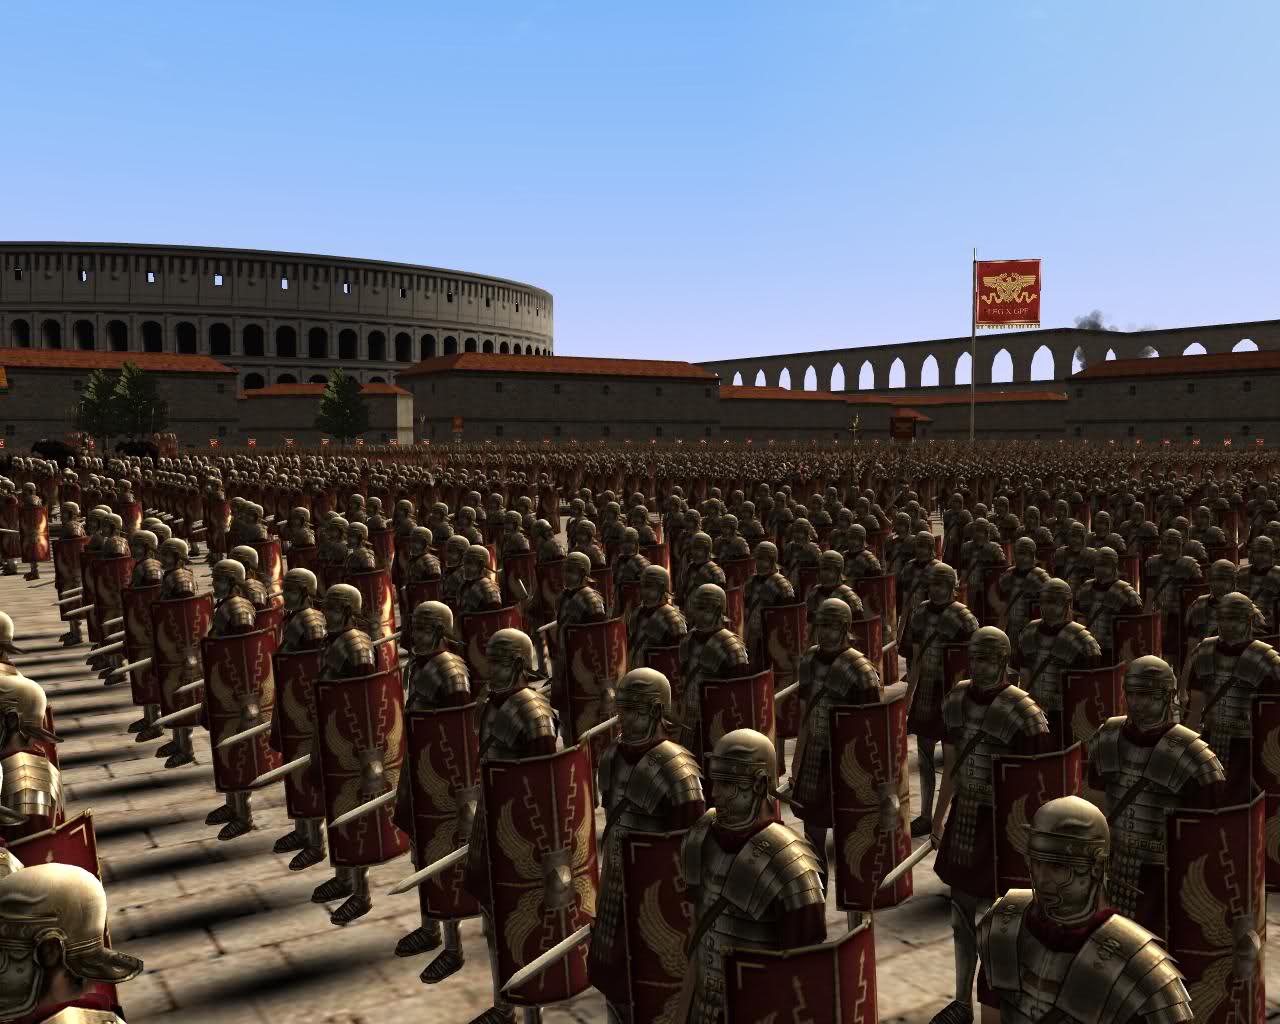 Войско римлян. Римская Империя Римский Легион. Римская Империя Легионы огромная армия. Древний Рим римские Легионы. Древнеримская армия Легион.